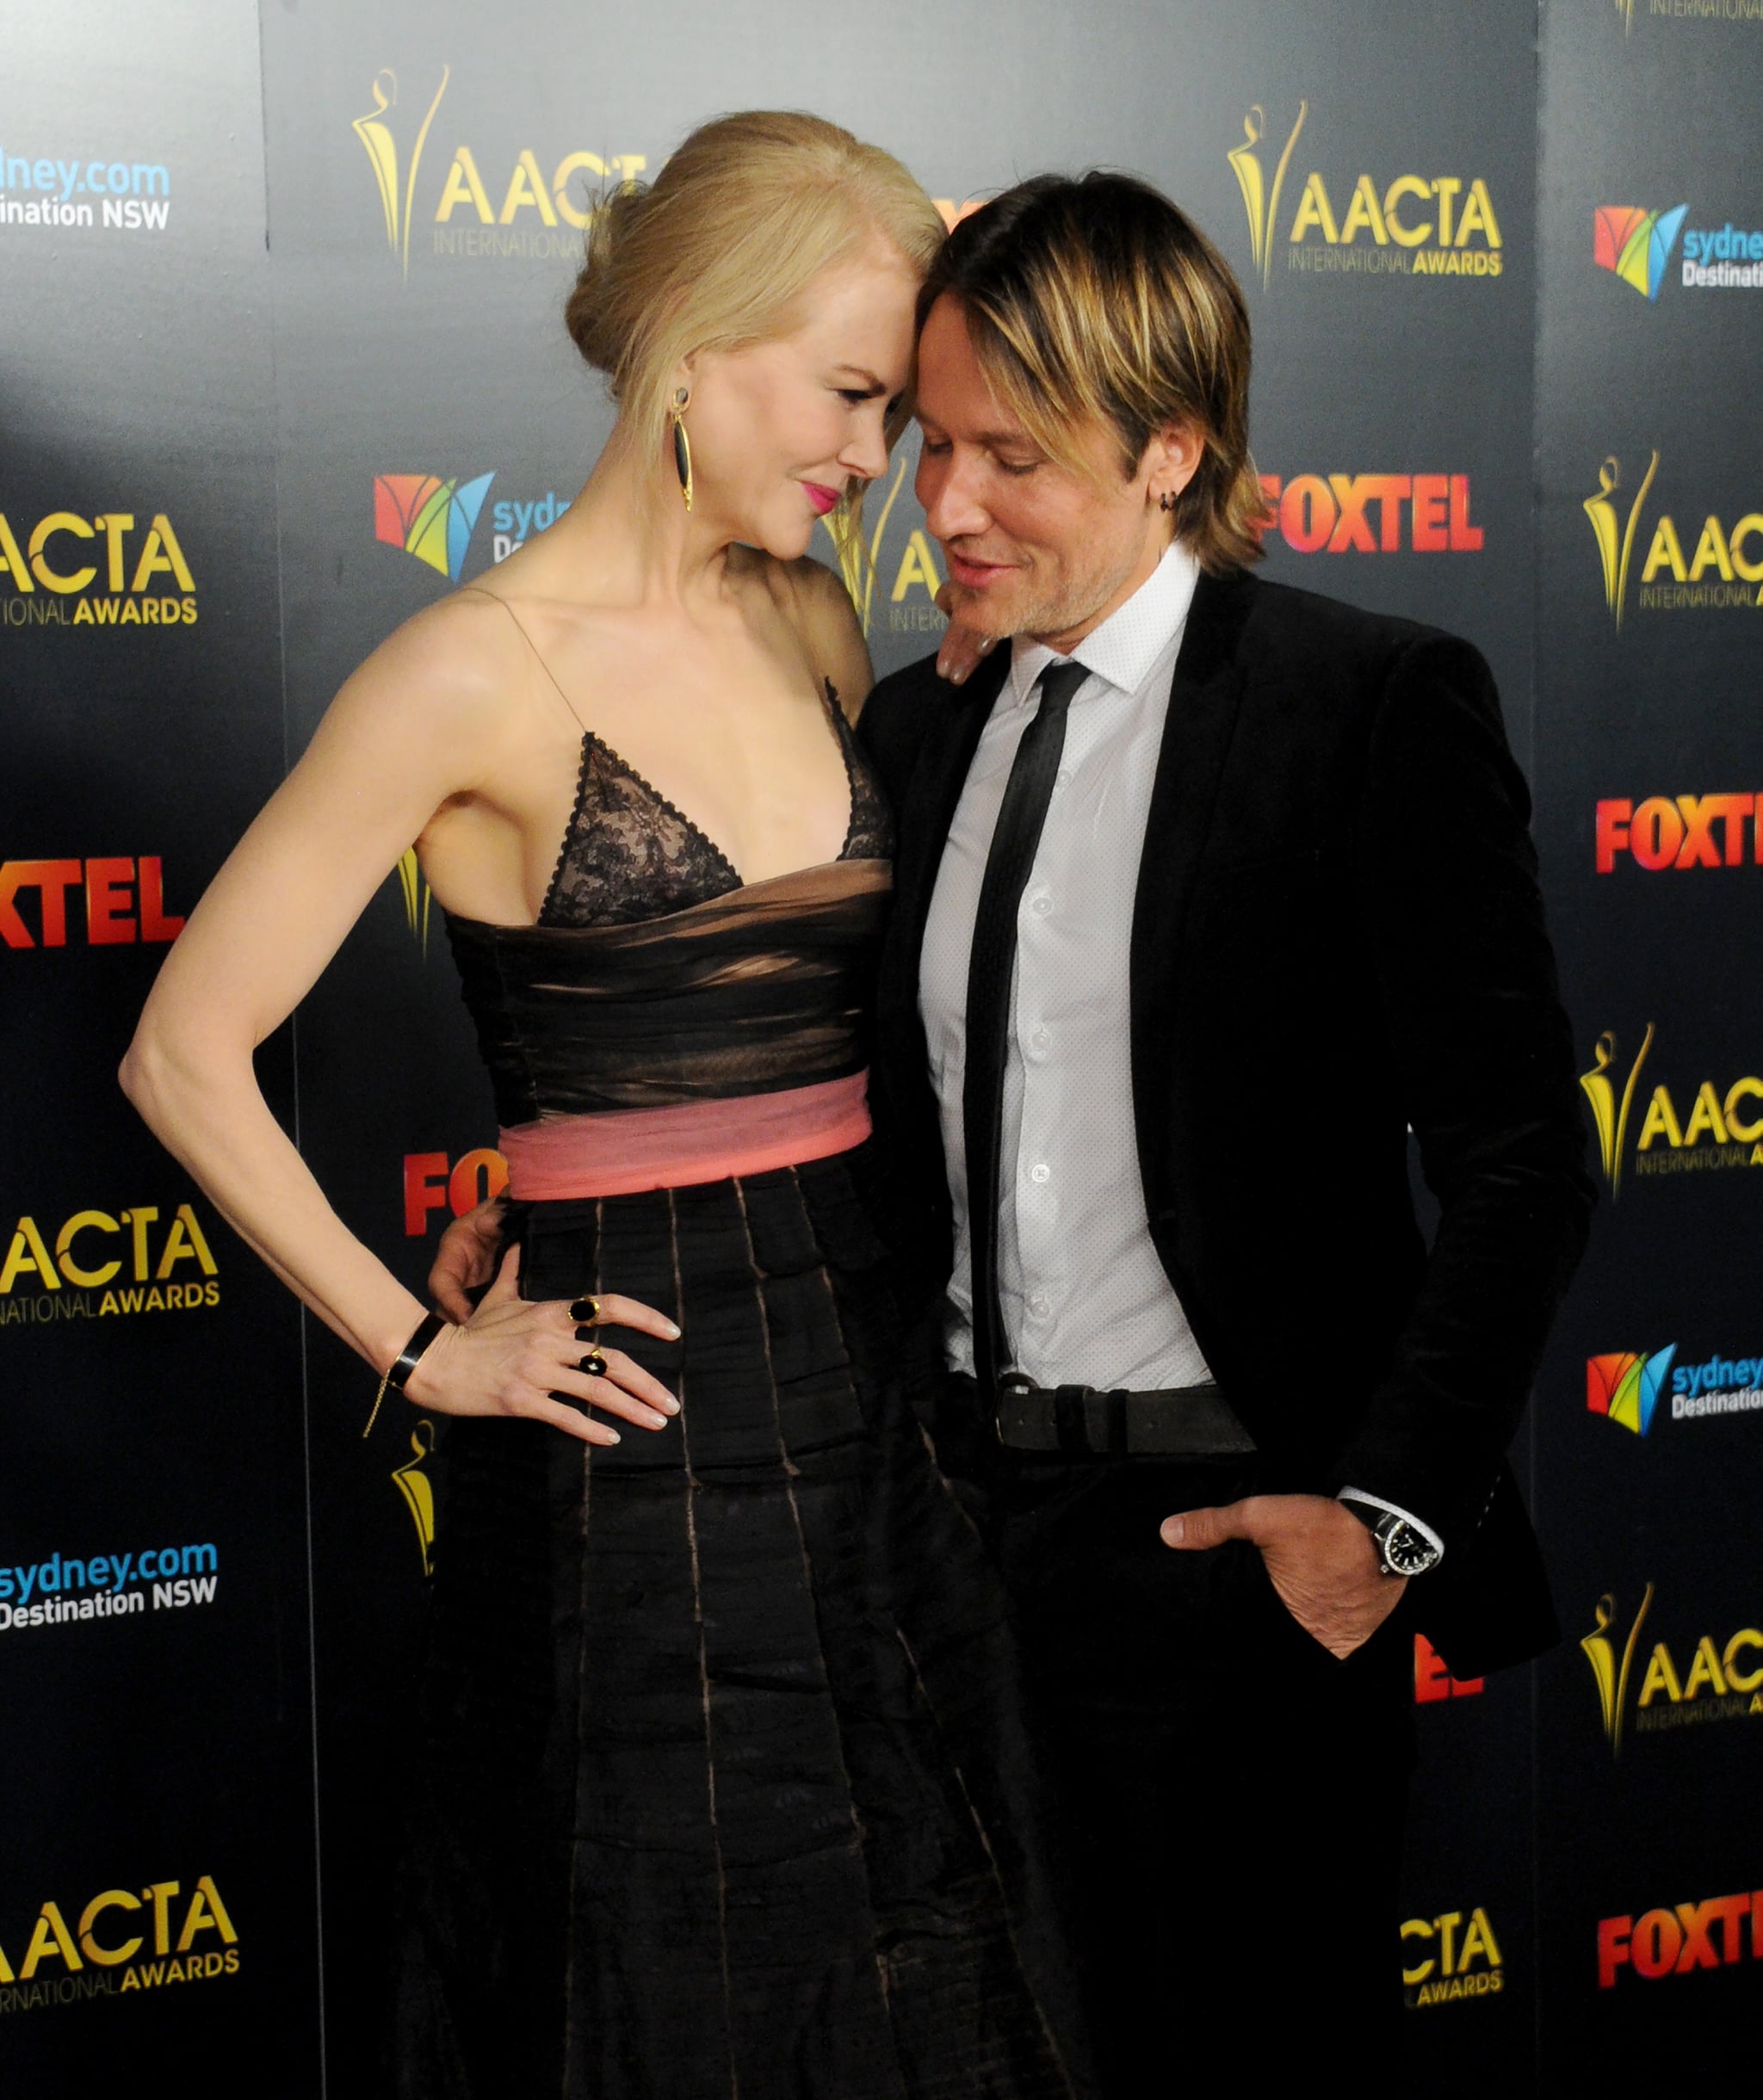 Keith Urban Whispering in Nicole Kidman's Ear Pictures | POPSUGAR Celebrity